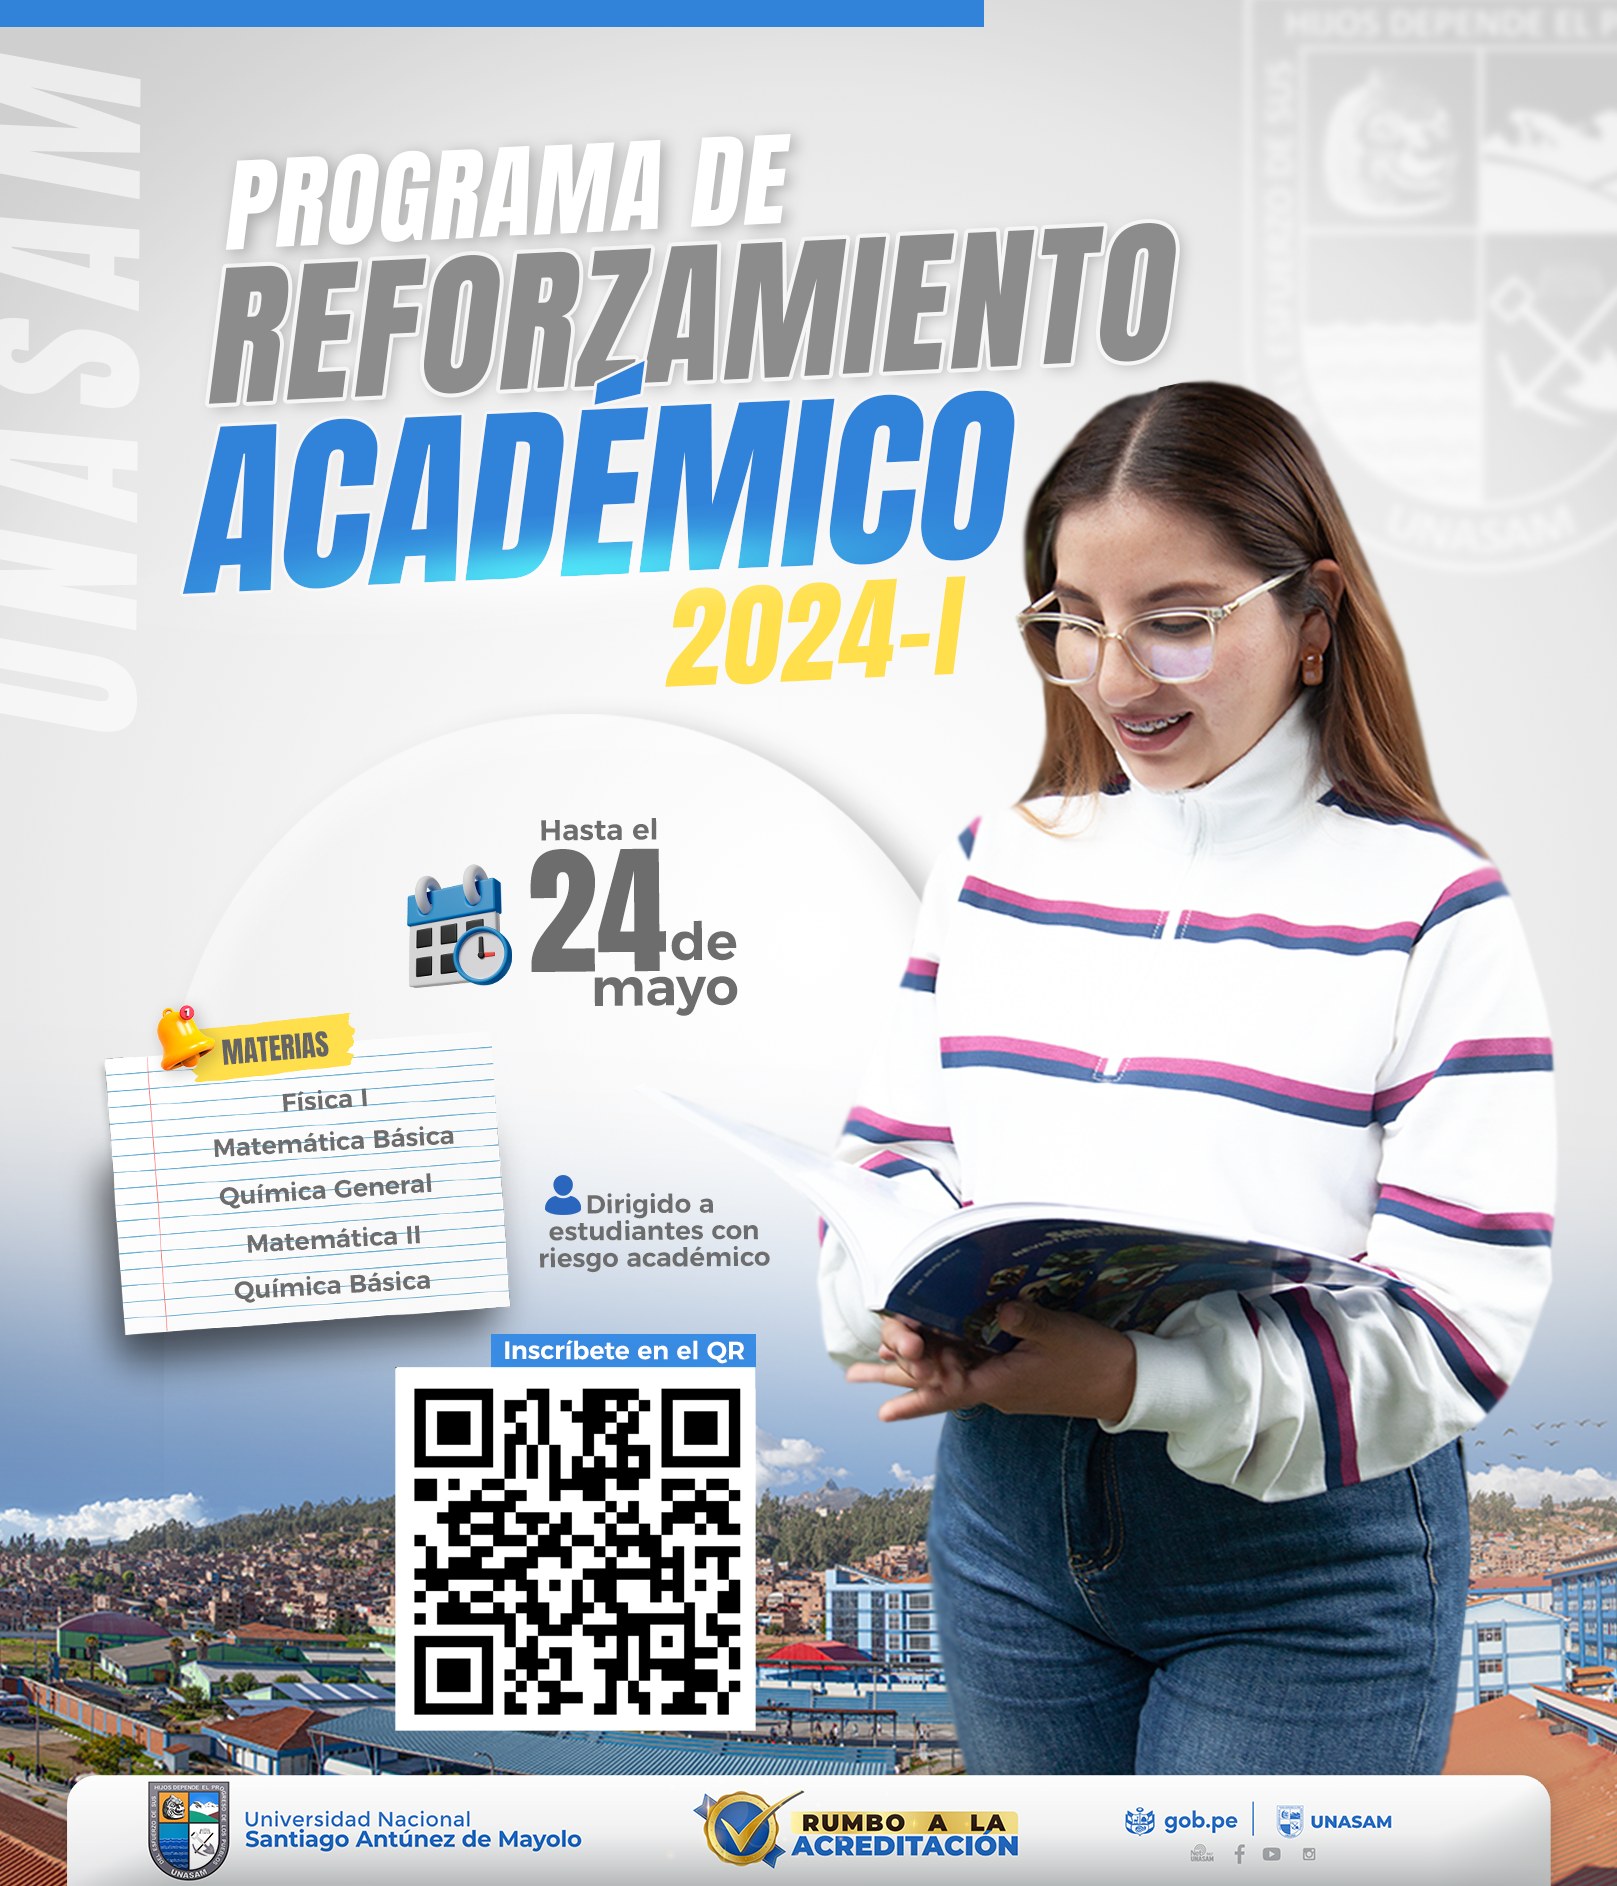  														PROGRAMA DE REFORZAMIENTO ACADÉMICO 2024-I
														